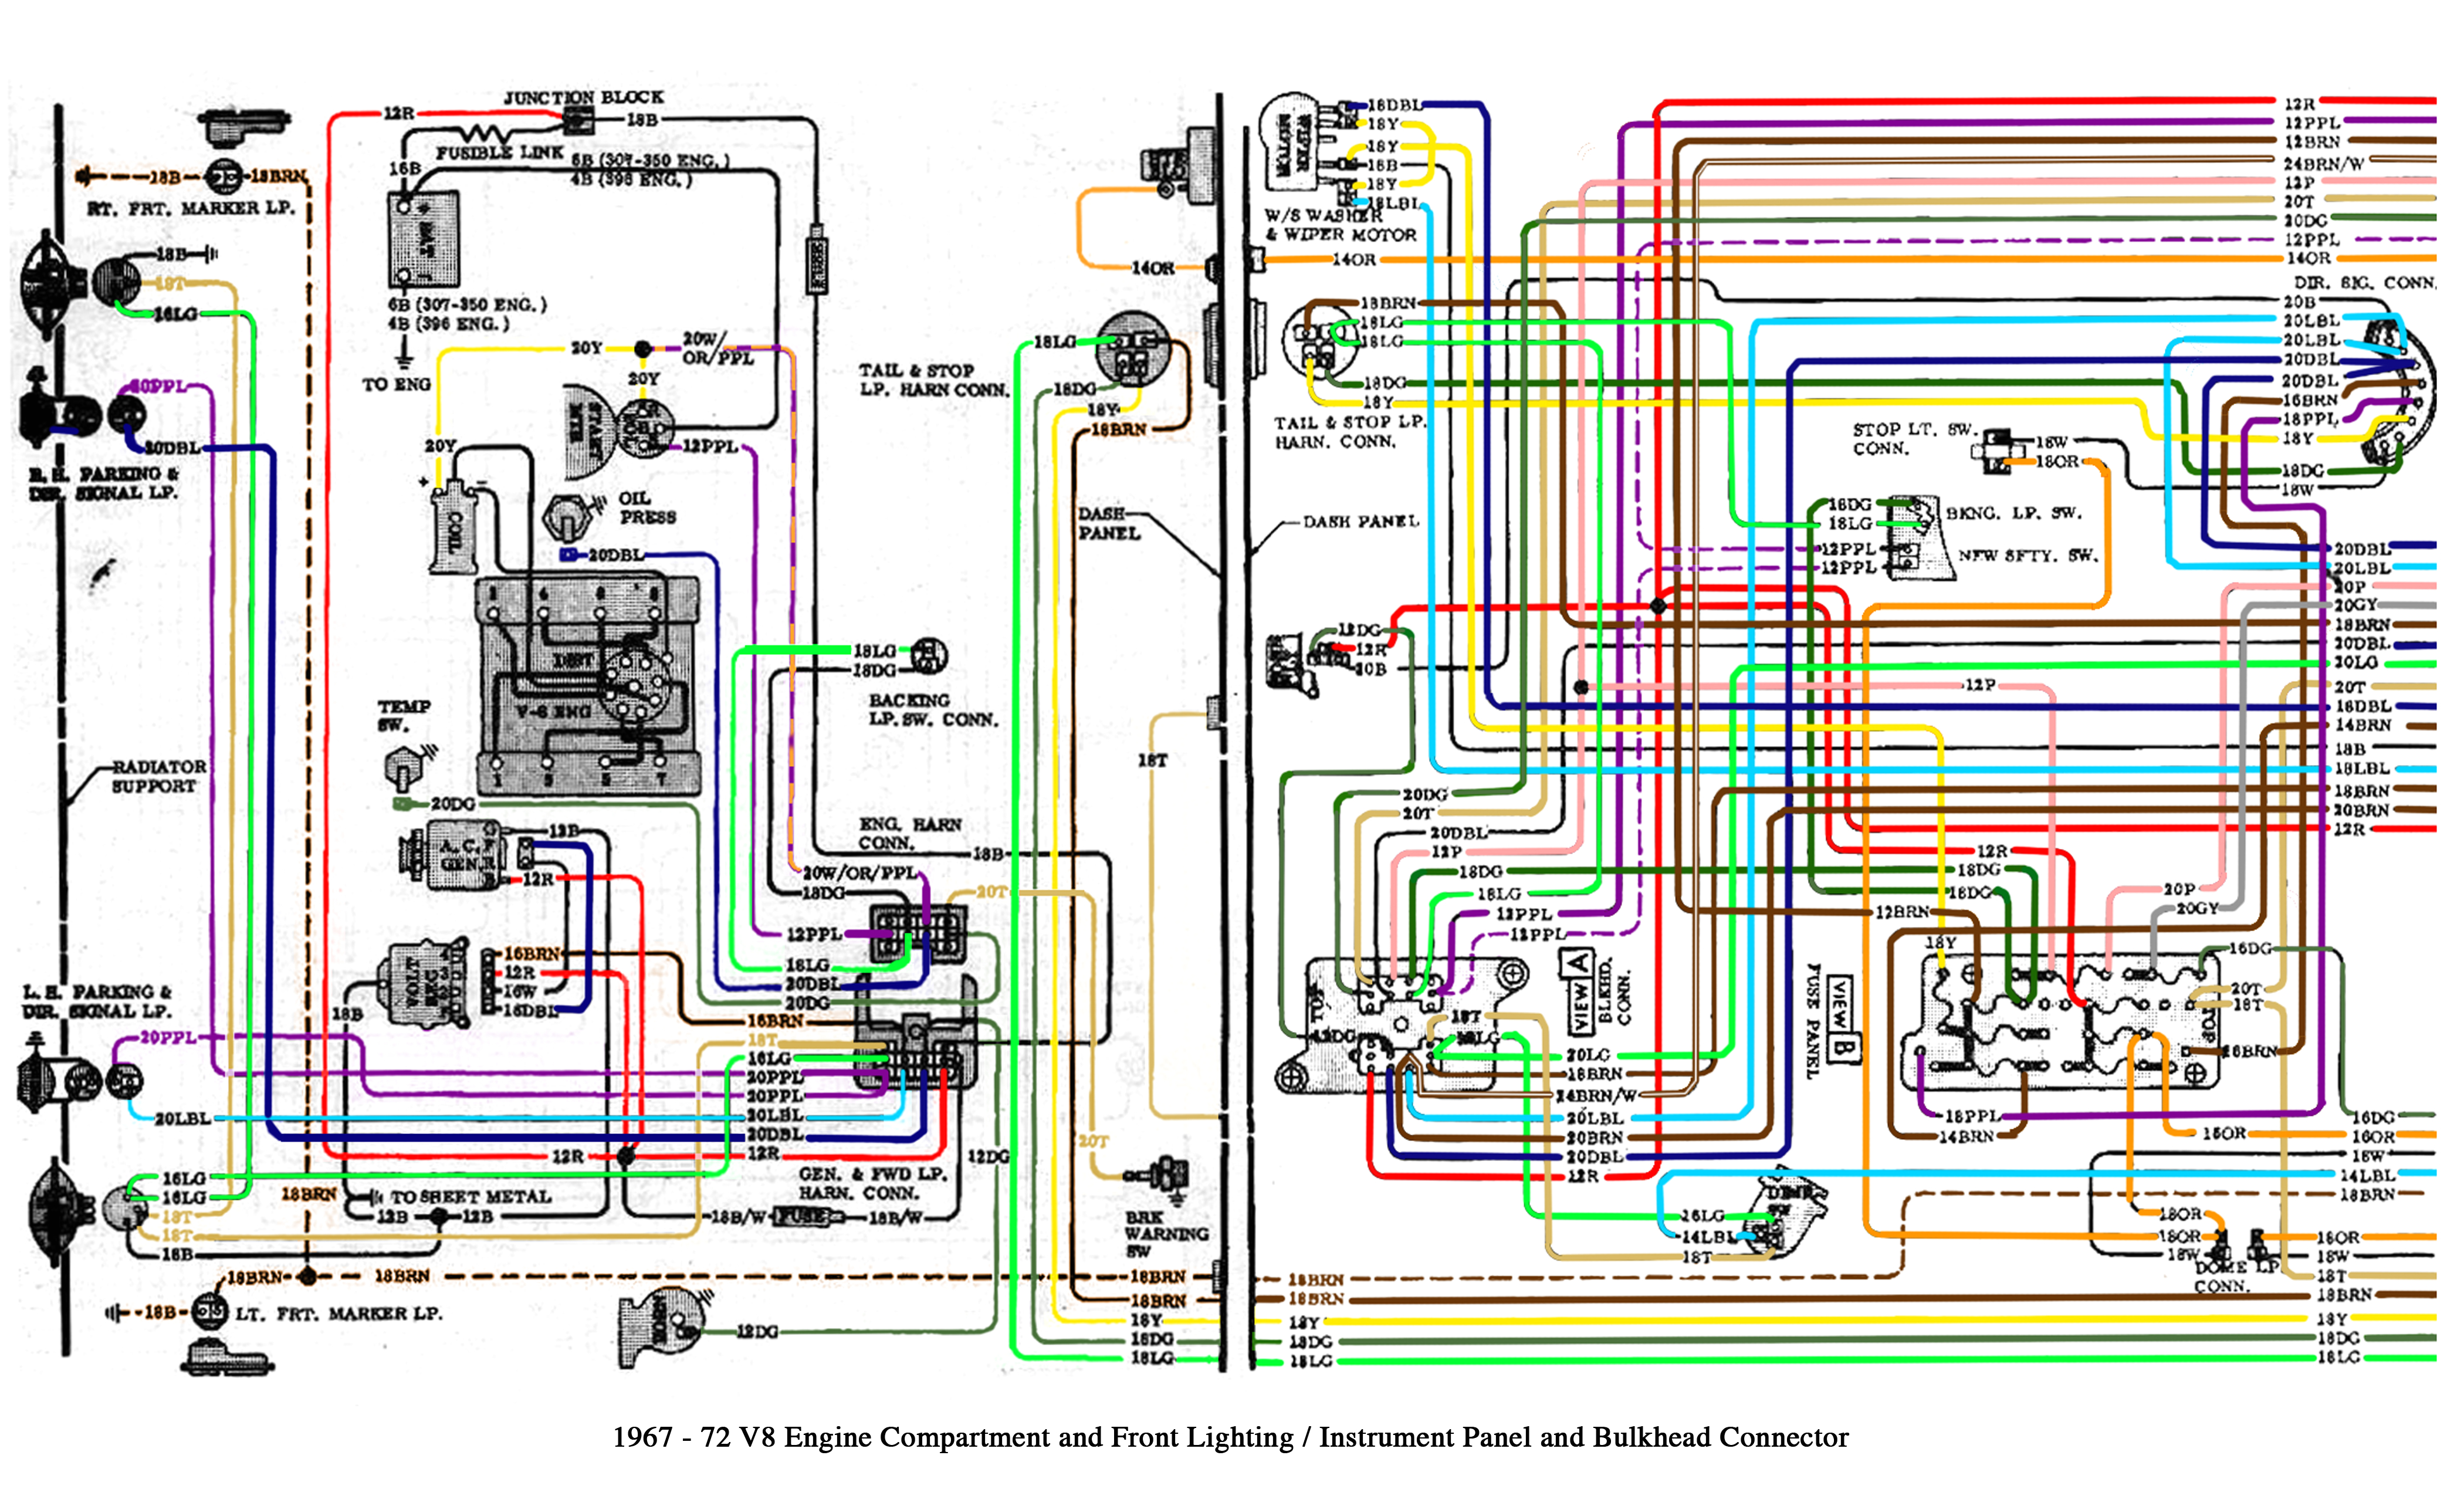 1968 chevy suburban wiring diagram wiring diagram review 1968 chevy suburban wiring diagram